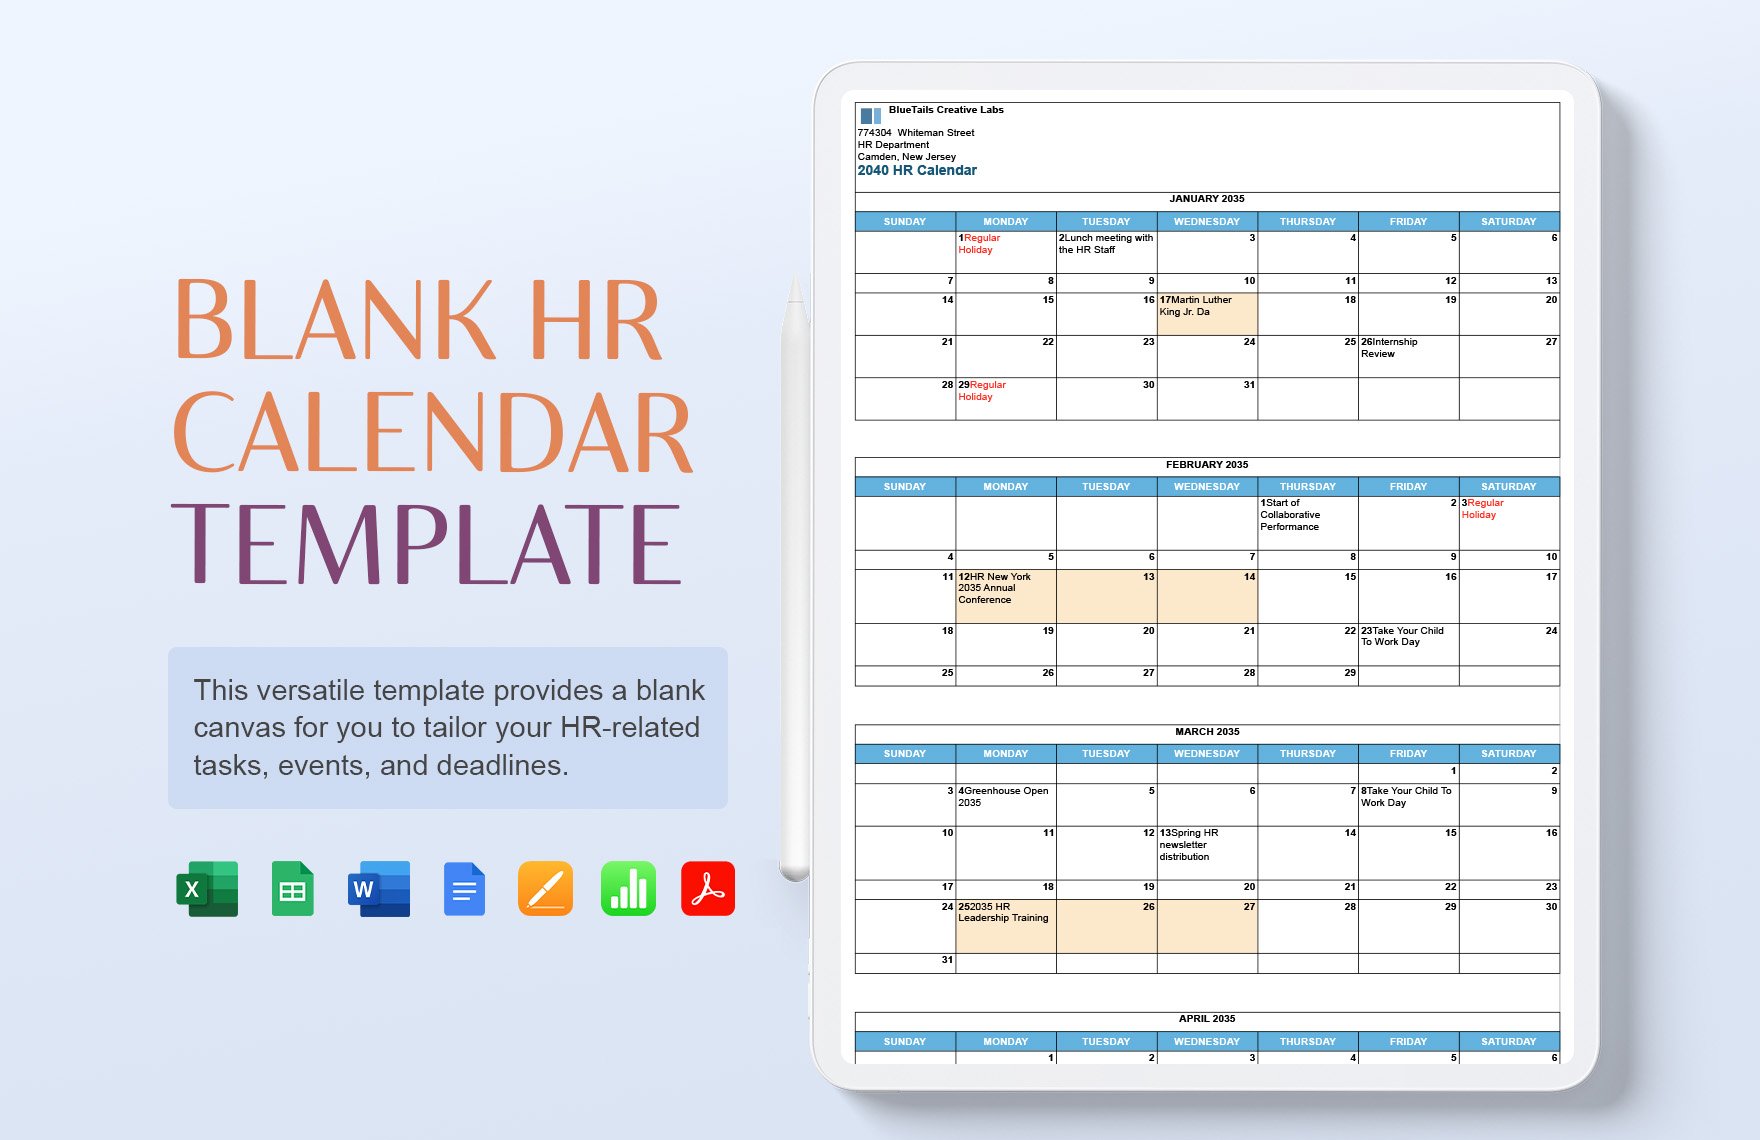 Blank HR Calendar Template